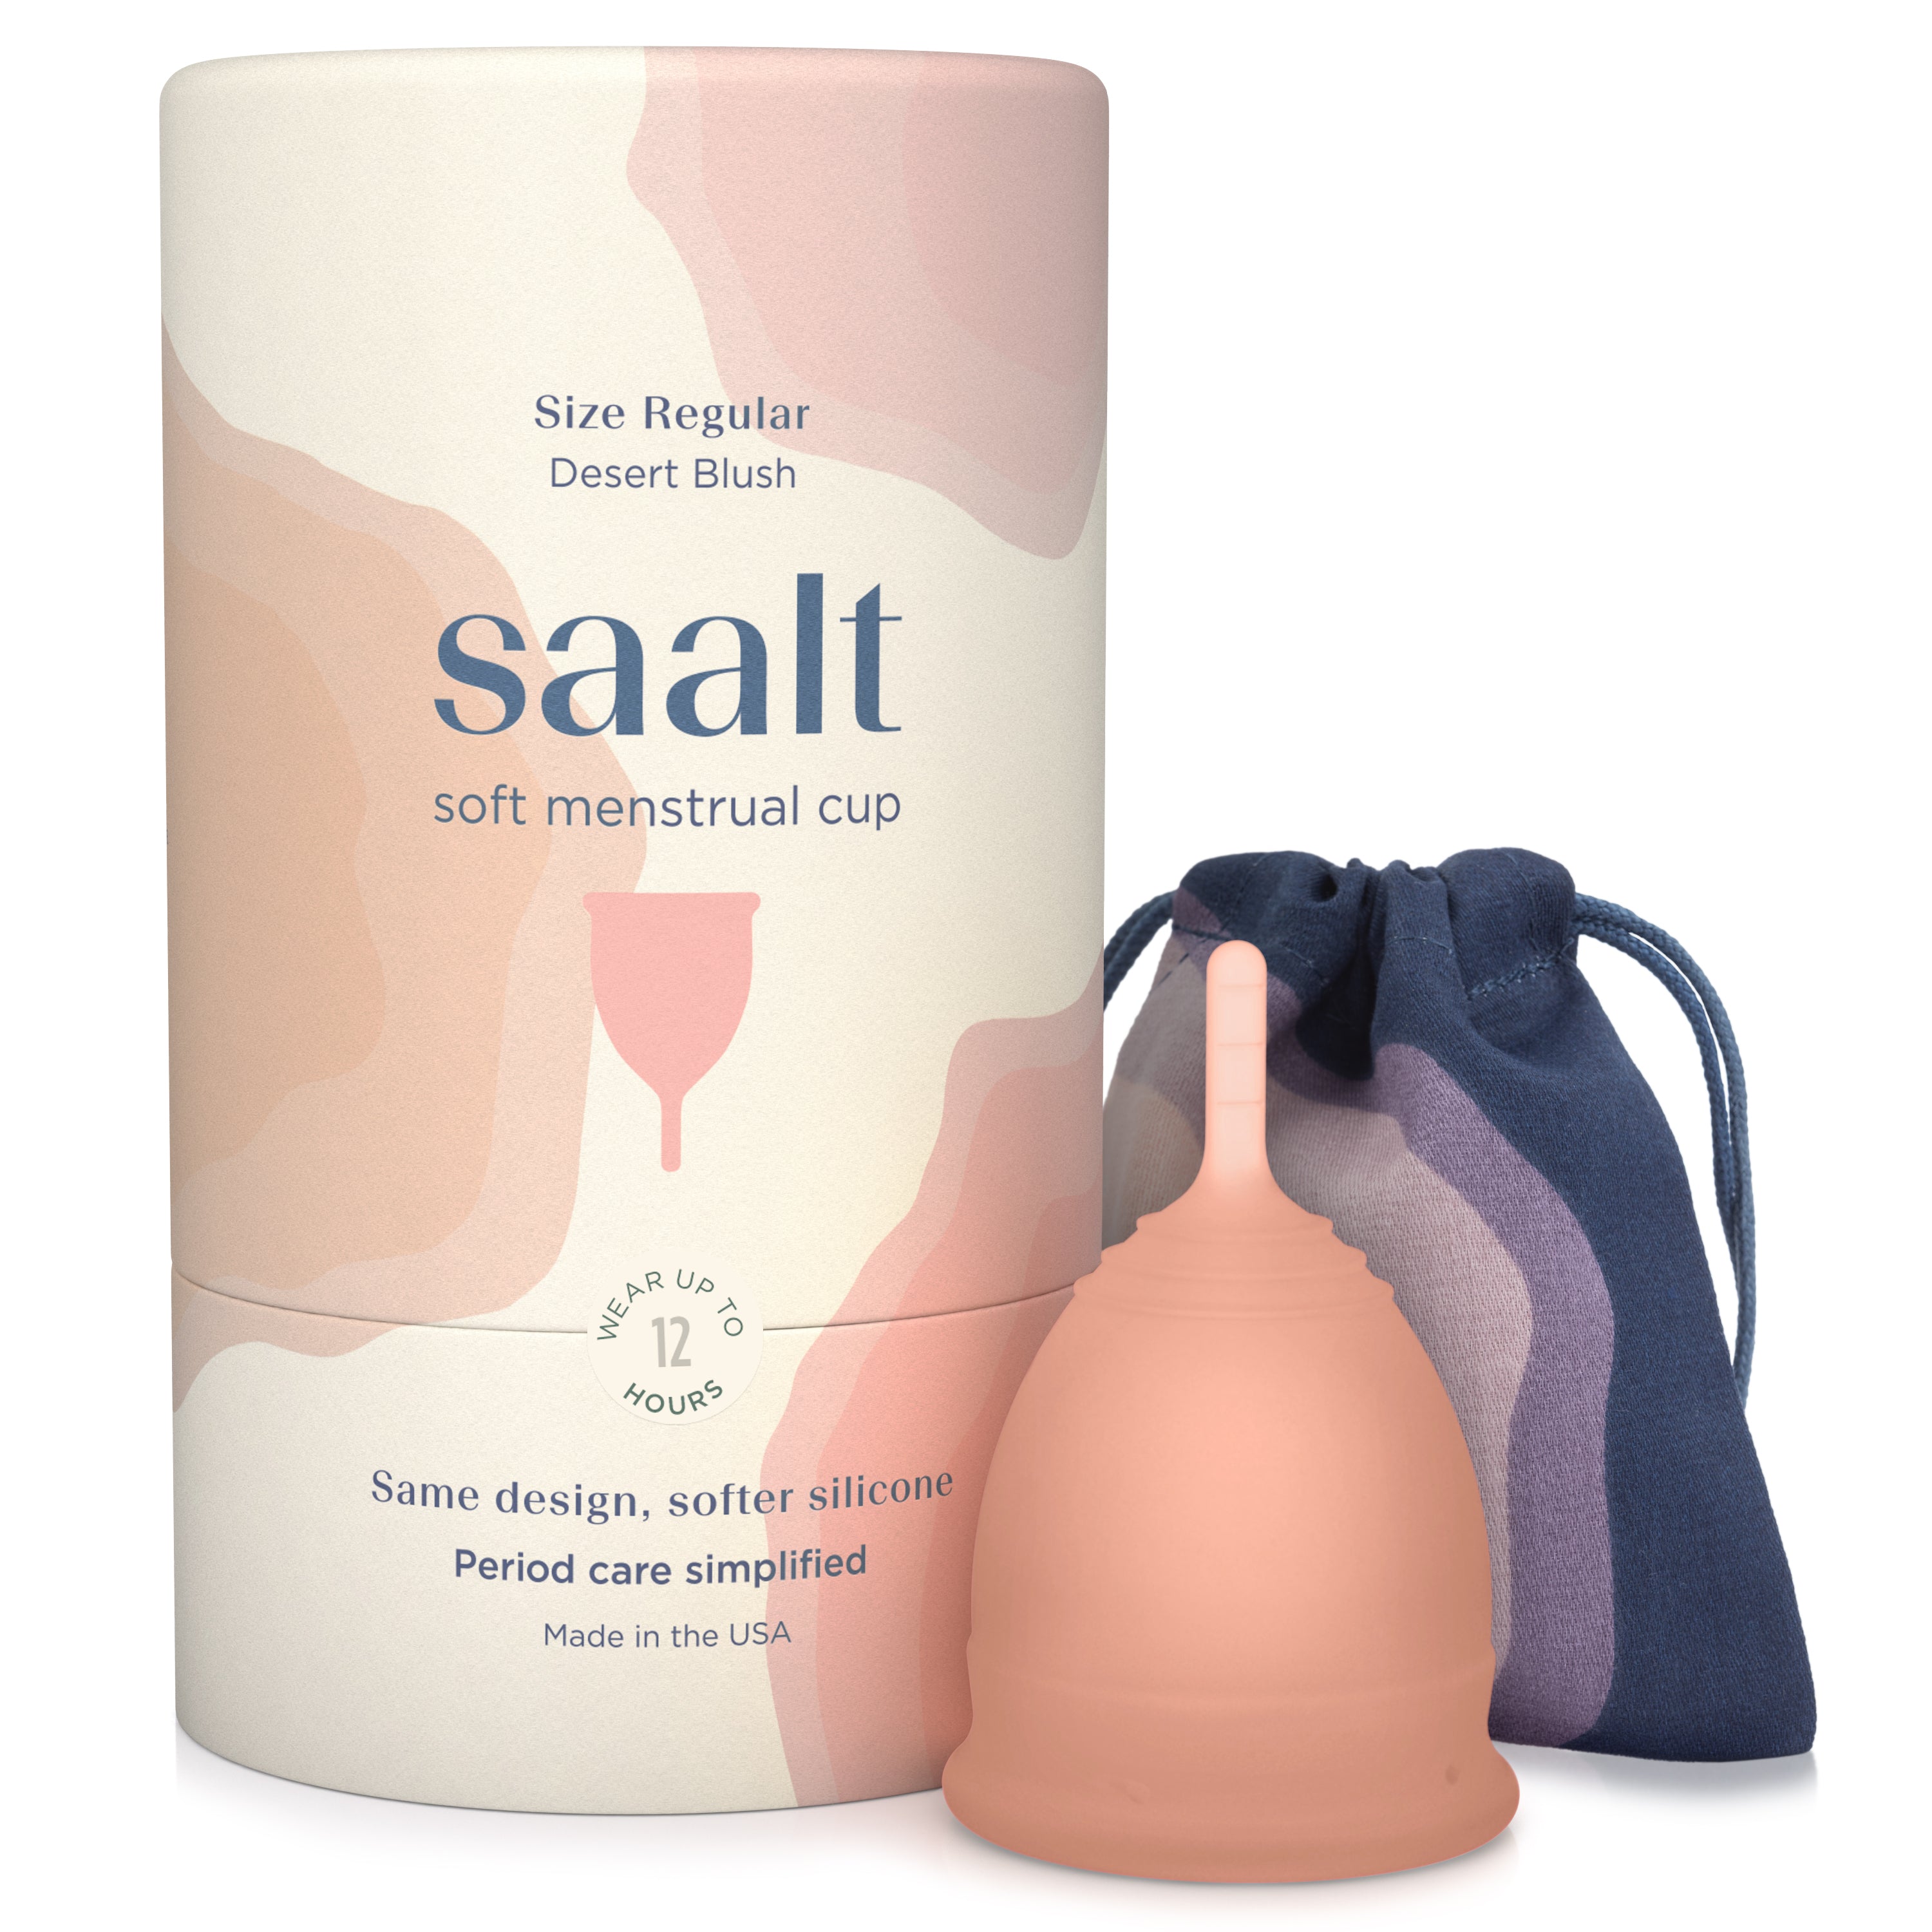 Soft blush menstrual cup.